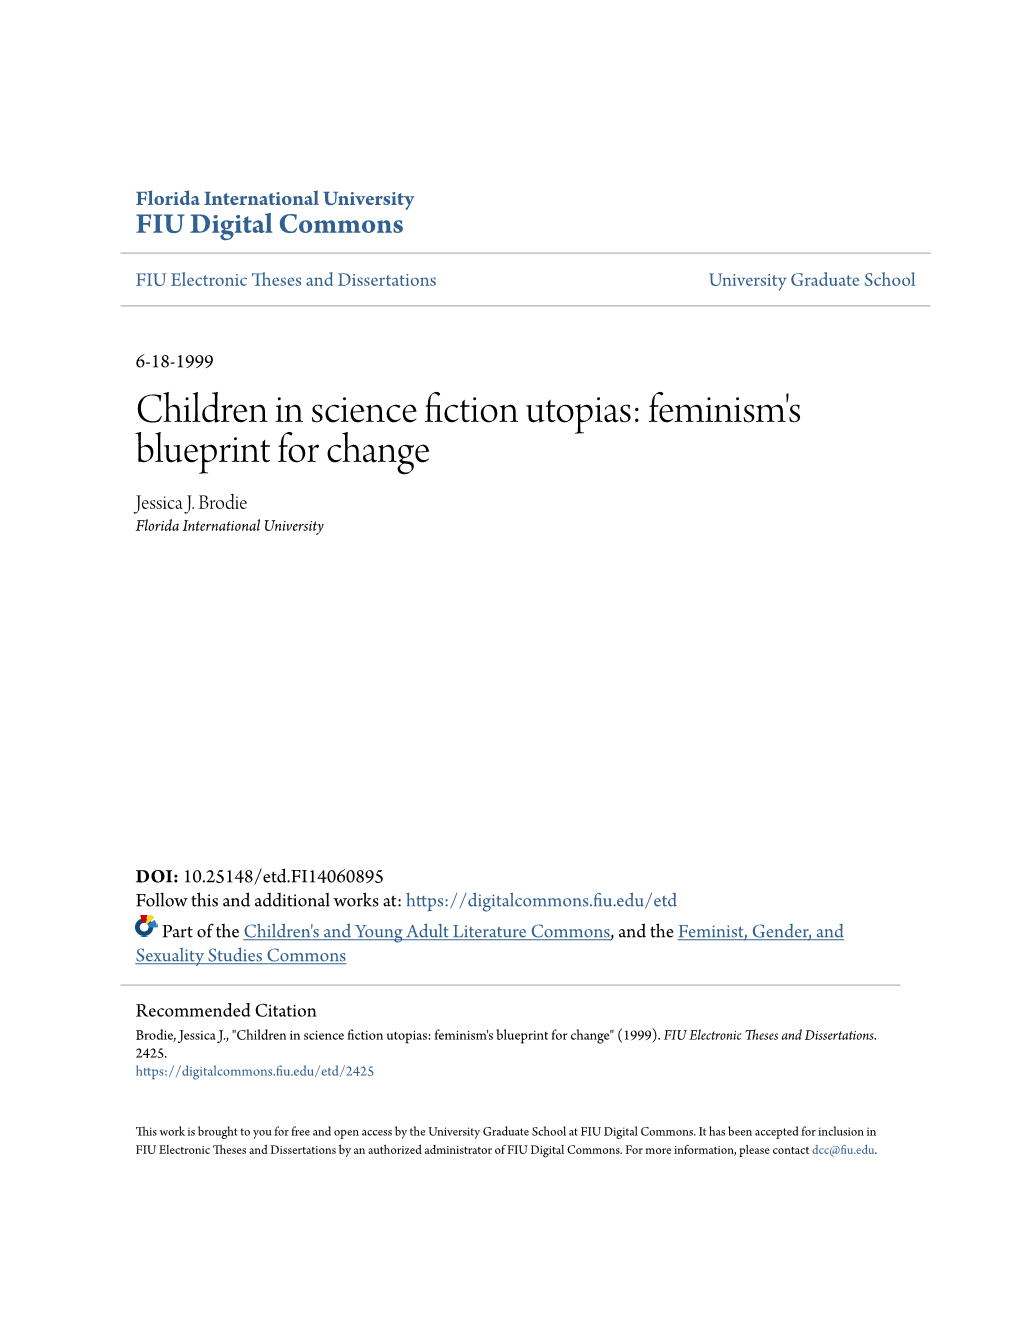 Children in Science Fiction Utopias: Feminism's Blueprint for Change Jessica J